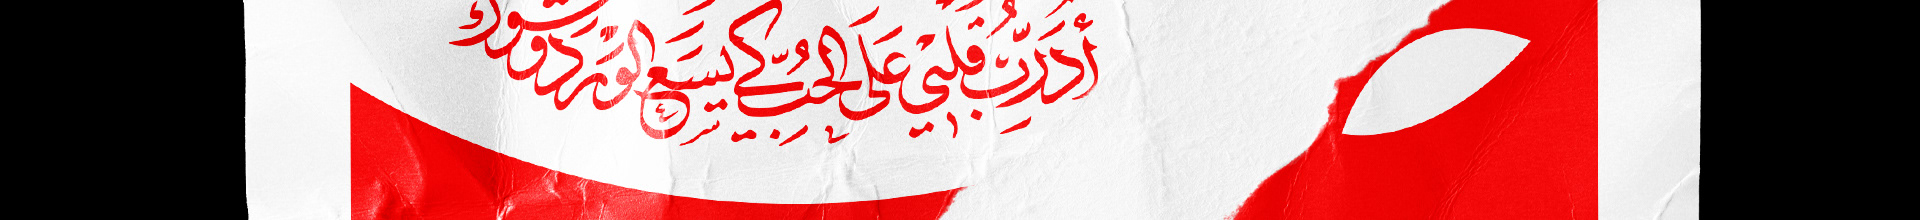 Ibrahim Zaki's profile banner